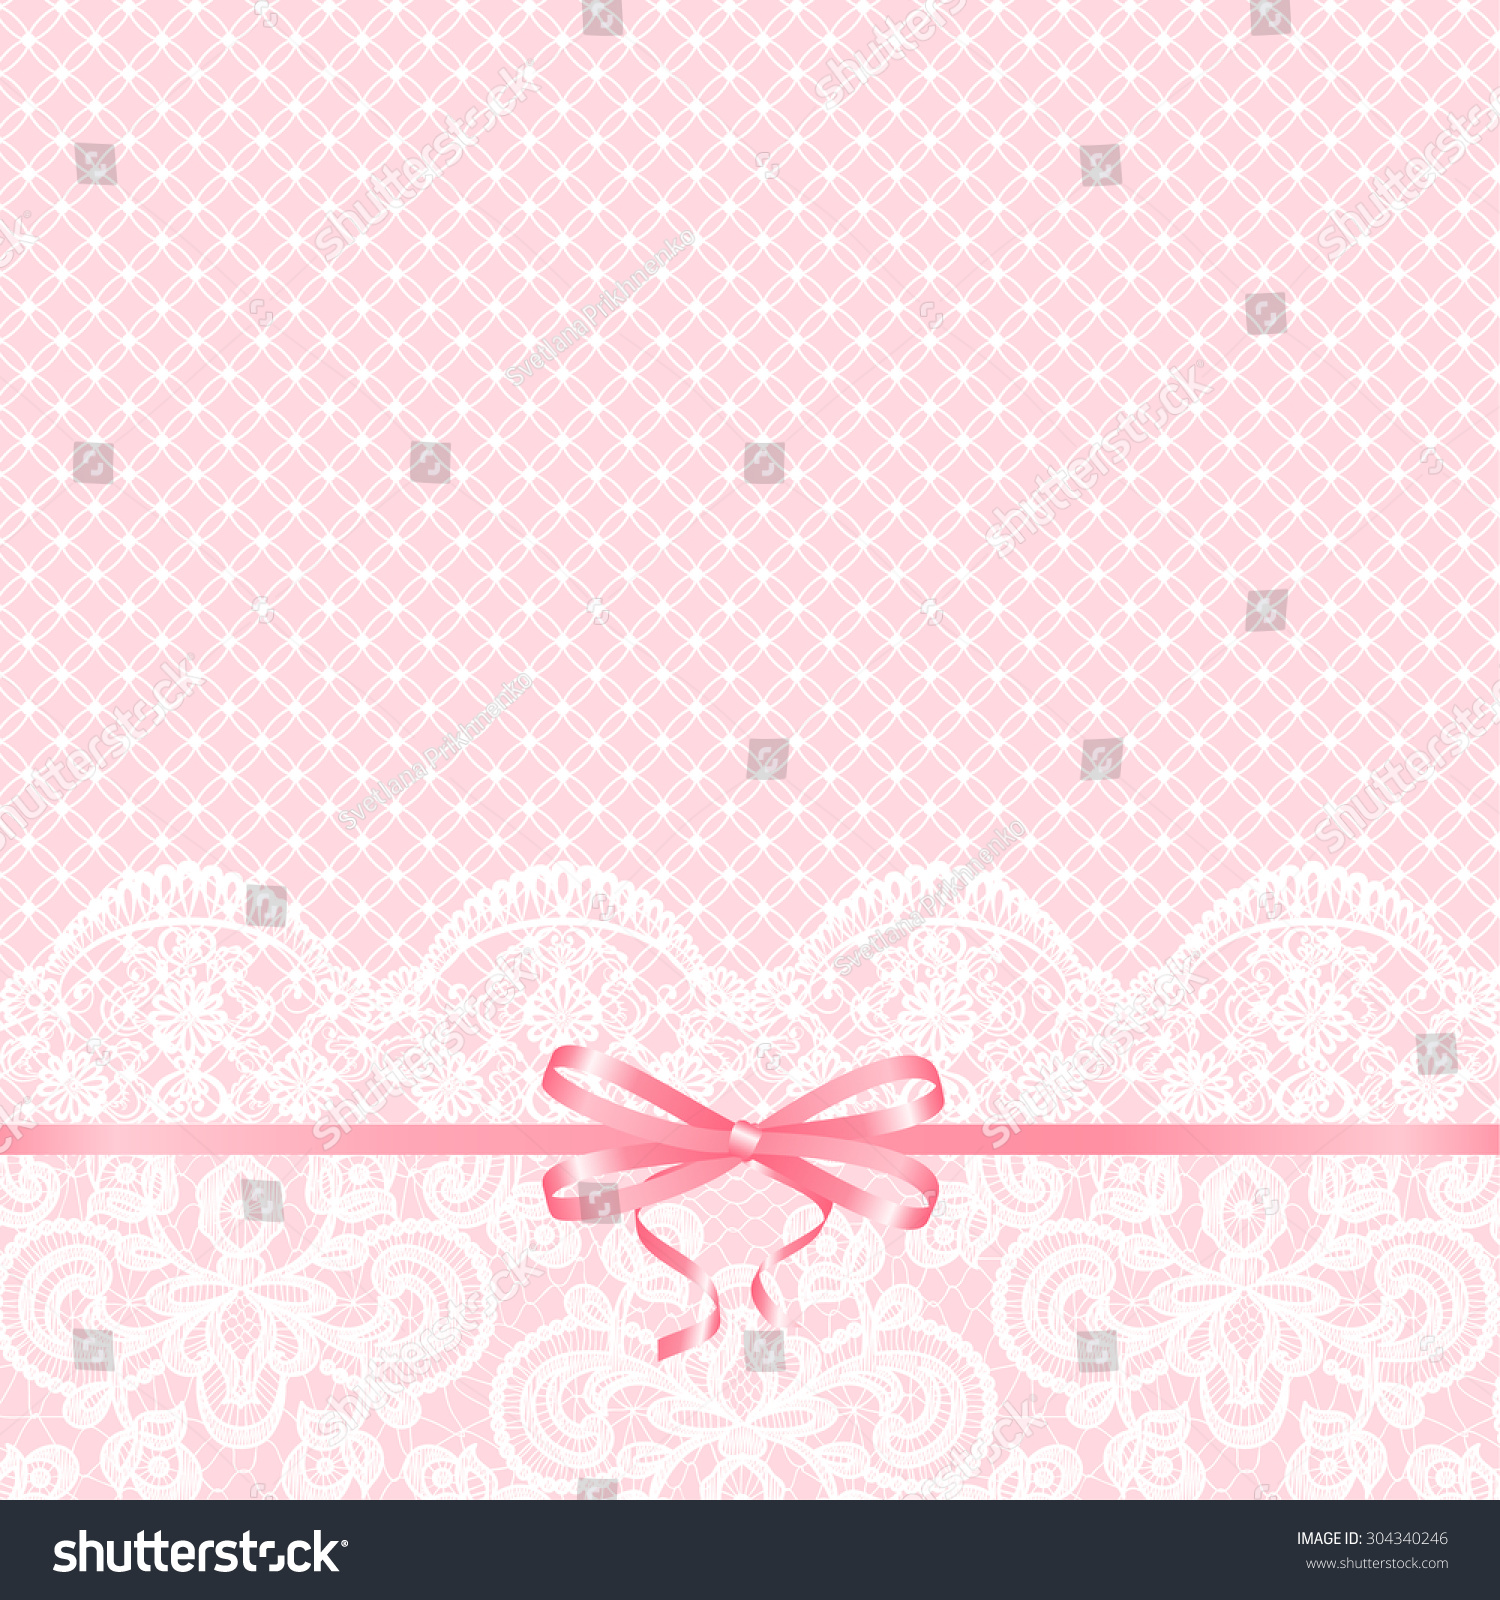 Wedding Invitation Greeting Card Pink Bow Stock Vector 304340246 ...